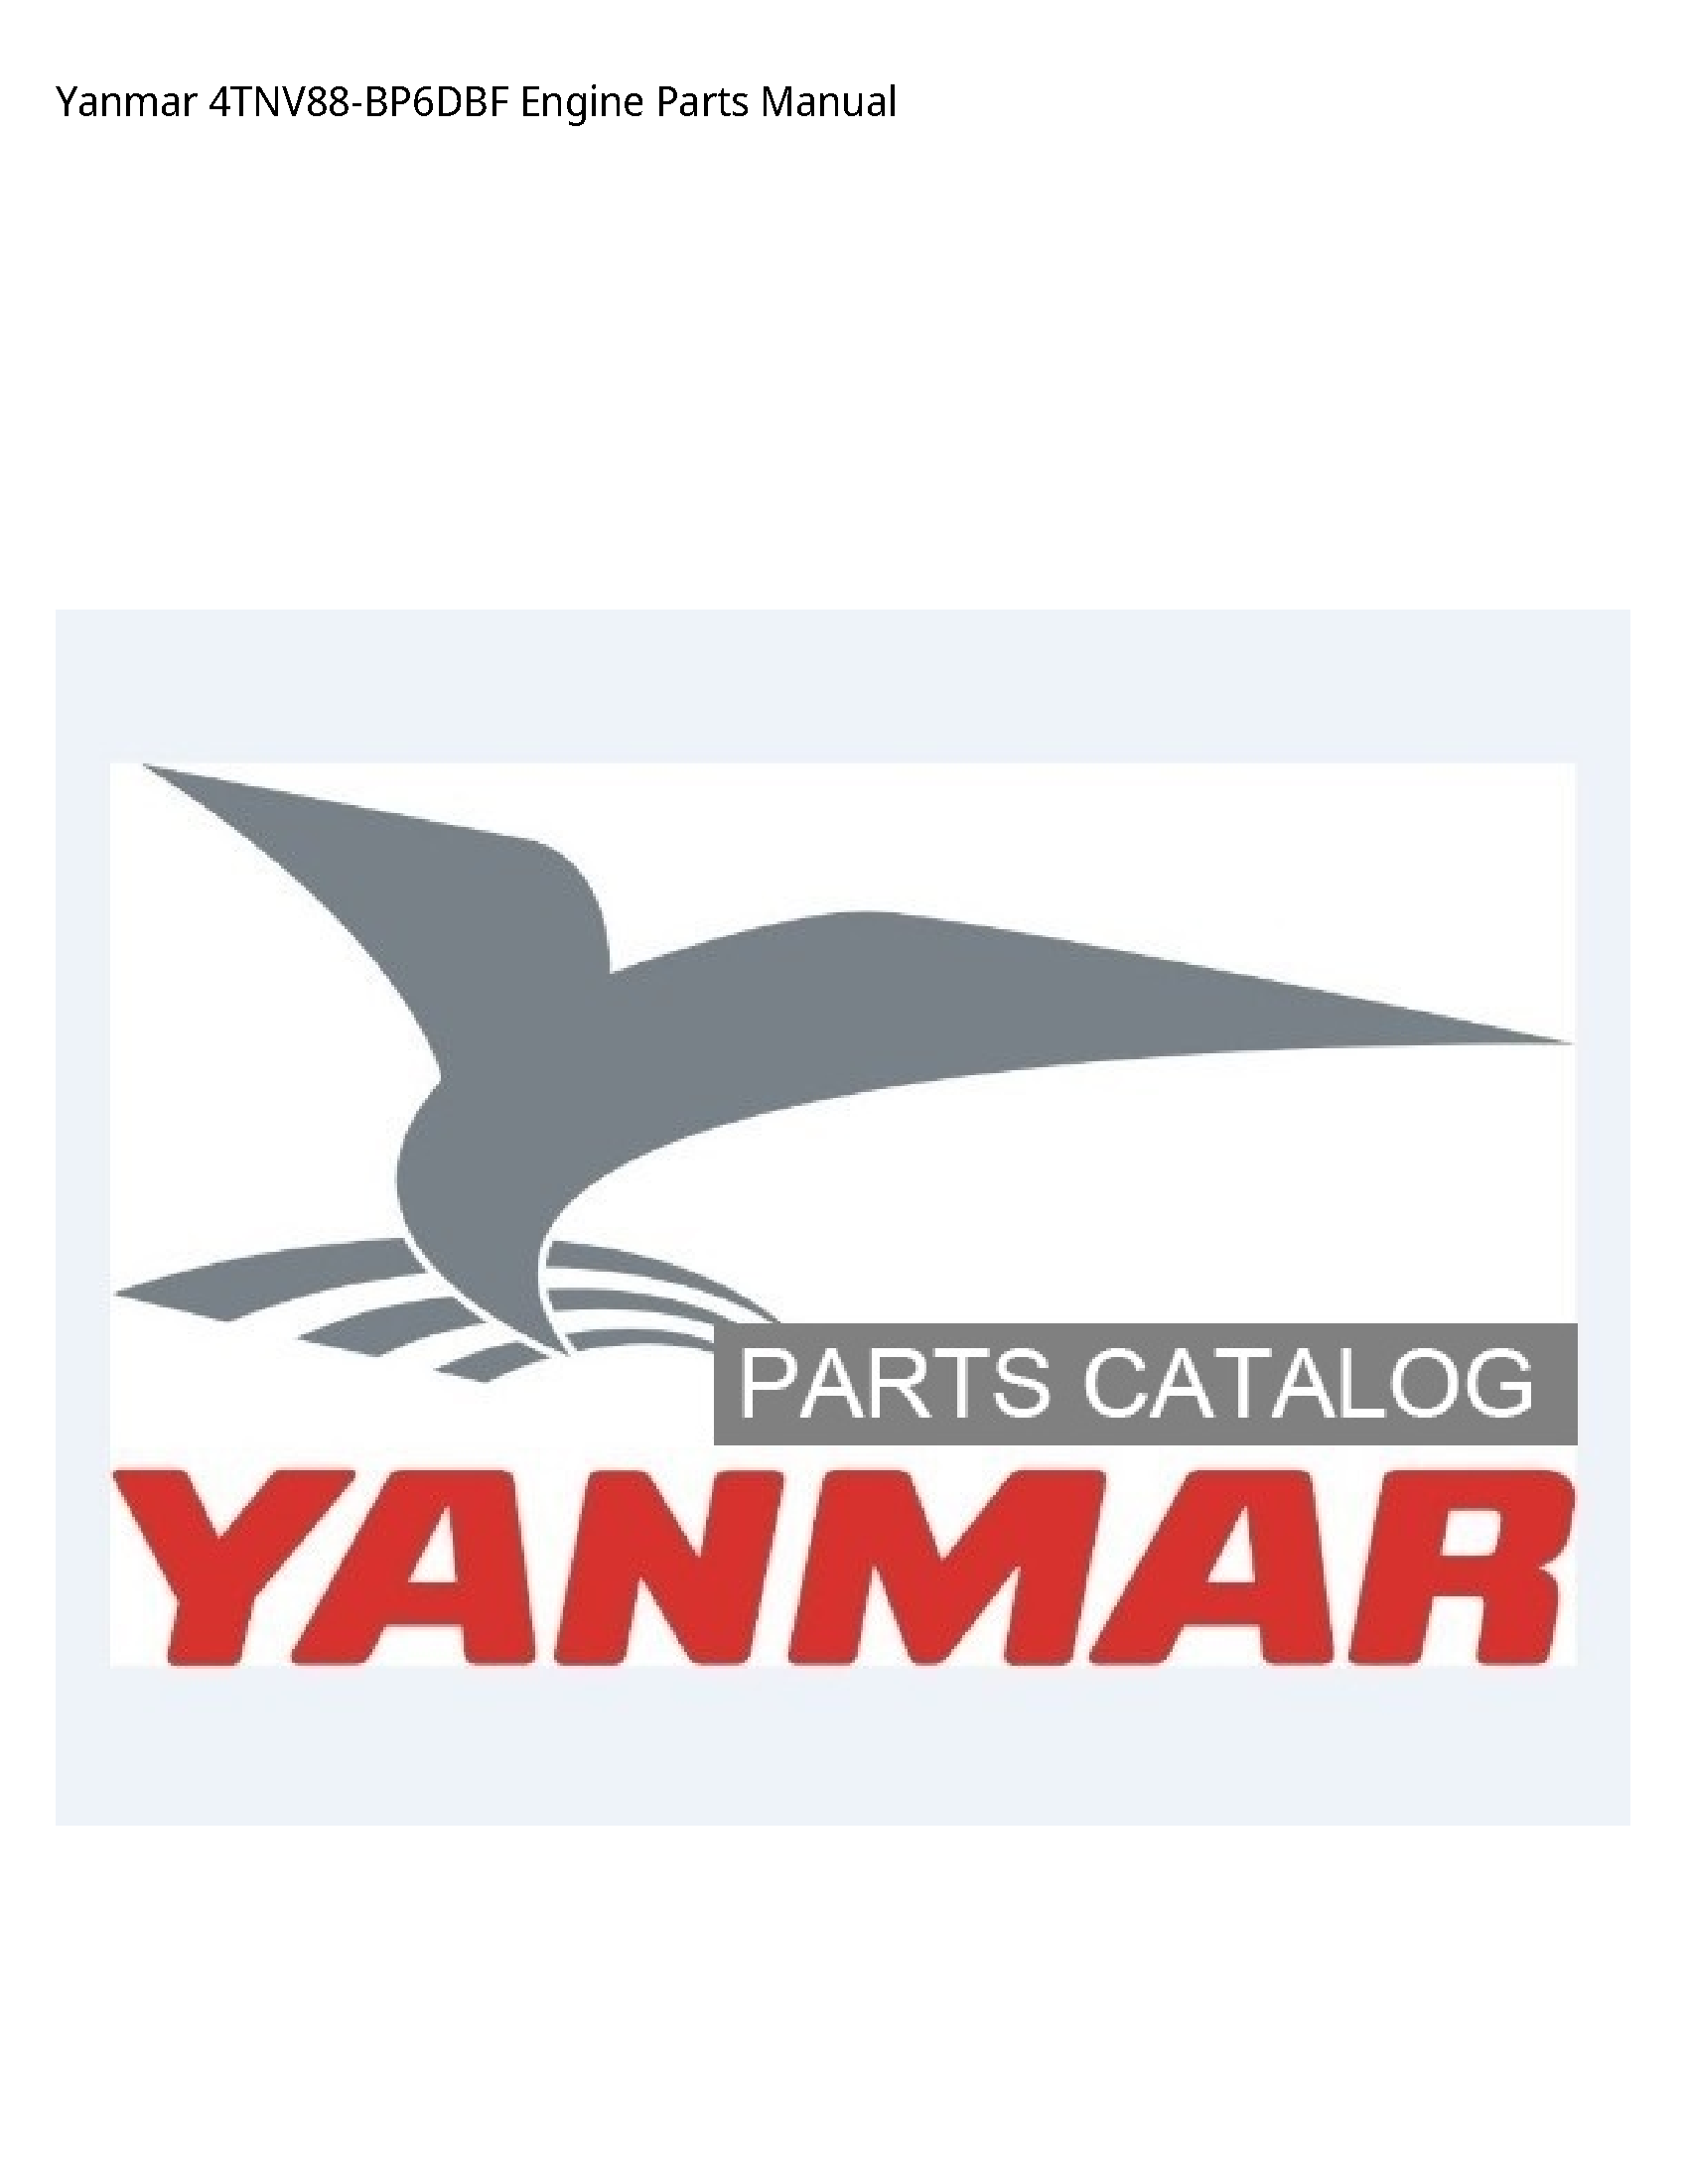 Yanmar 4TNV88-BP6DBF Engine Parts manual